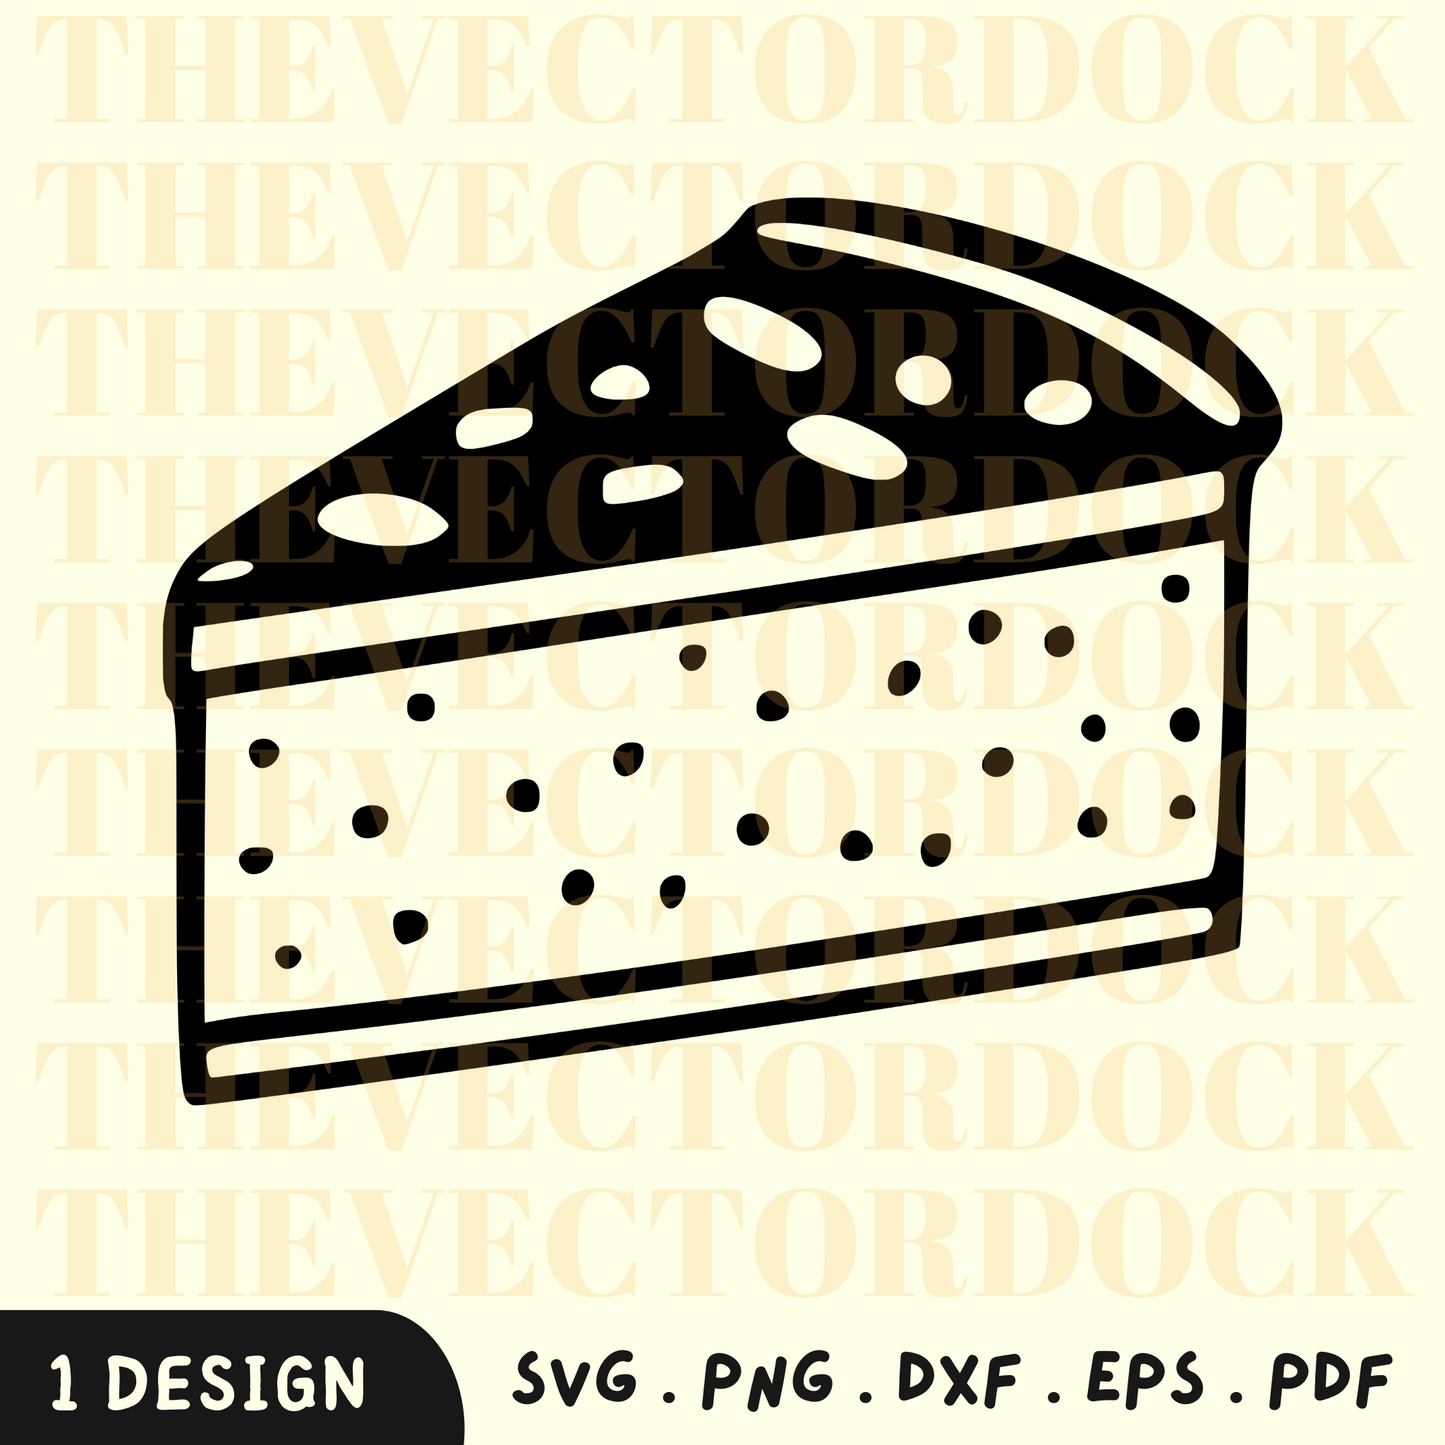 Cheesecake SVG, Cake Design SVG, Cheesecake PNG, Cheesecake Vector